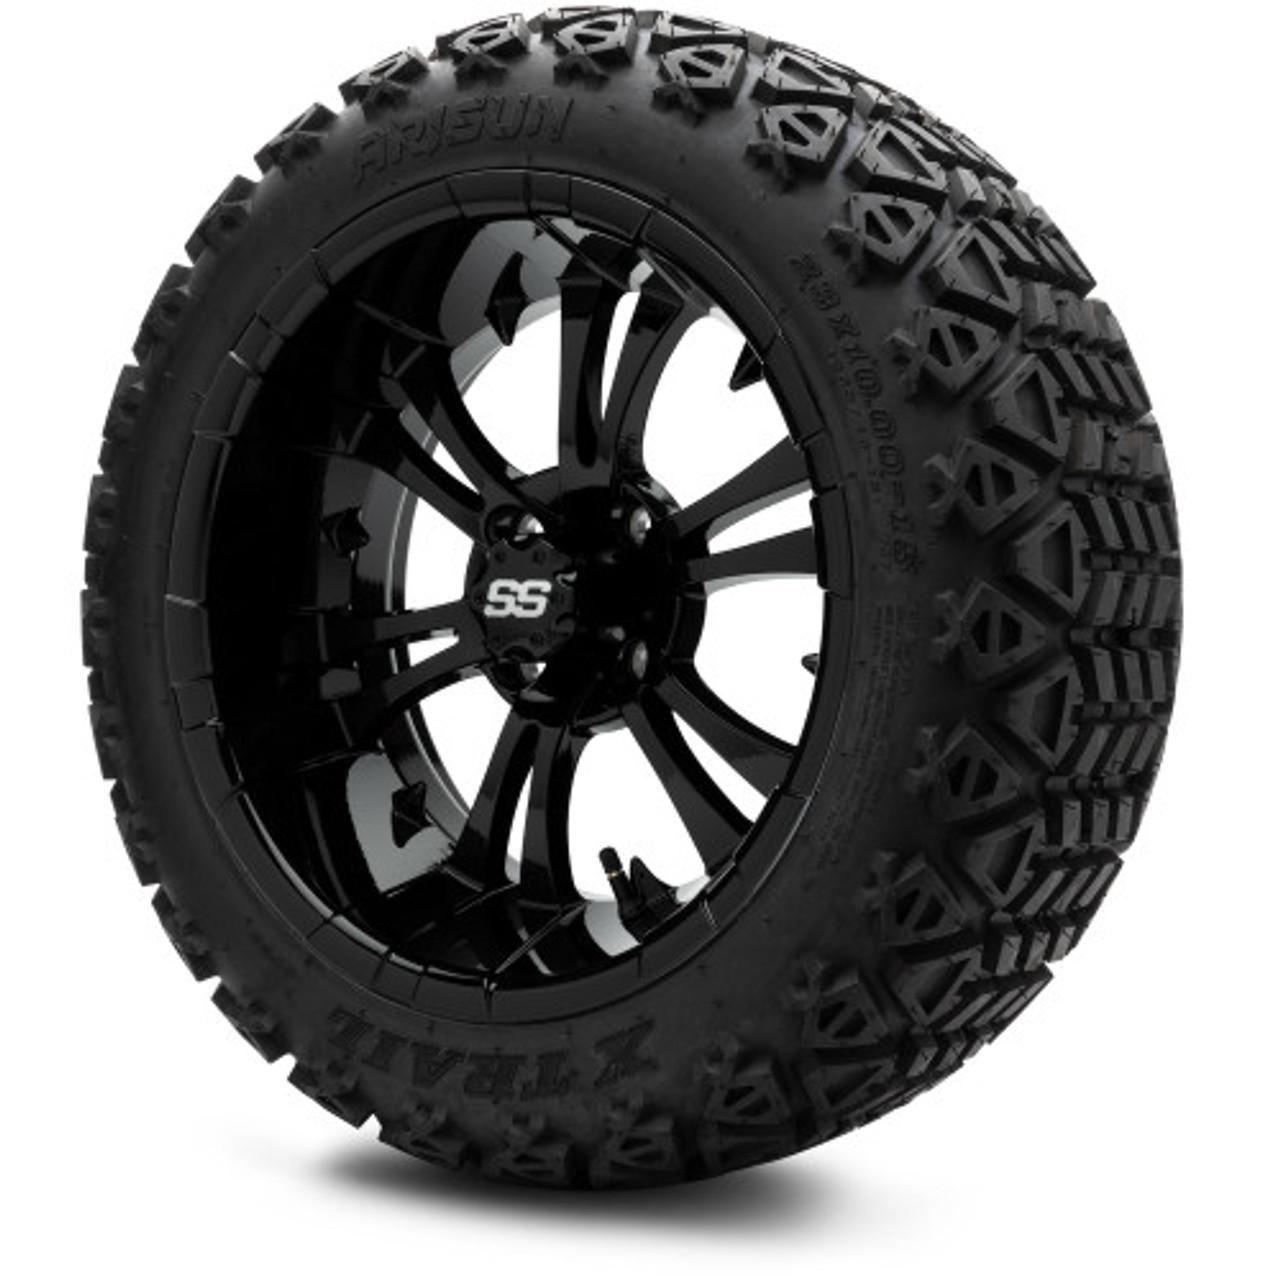 MODZ 15" Vampire Glossy Black Wheels & Off Road Tires Combo